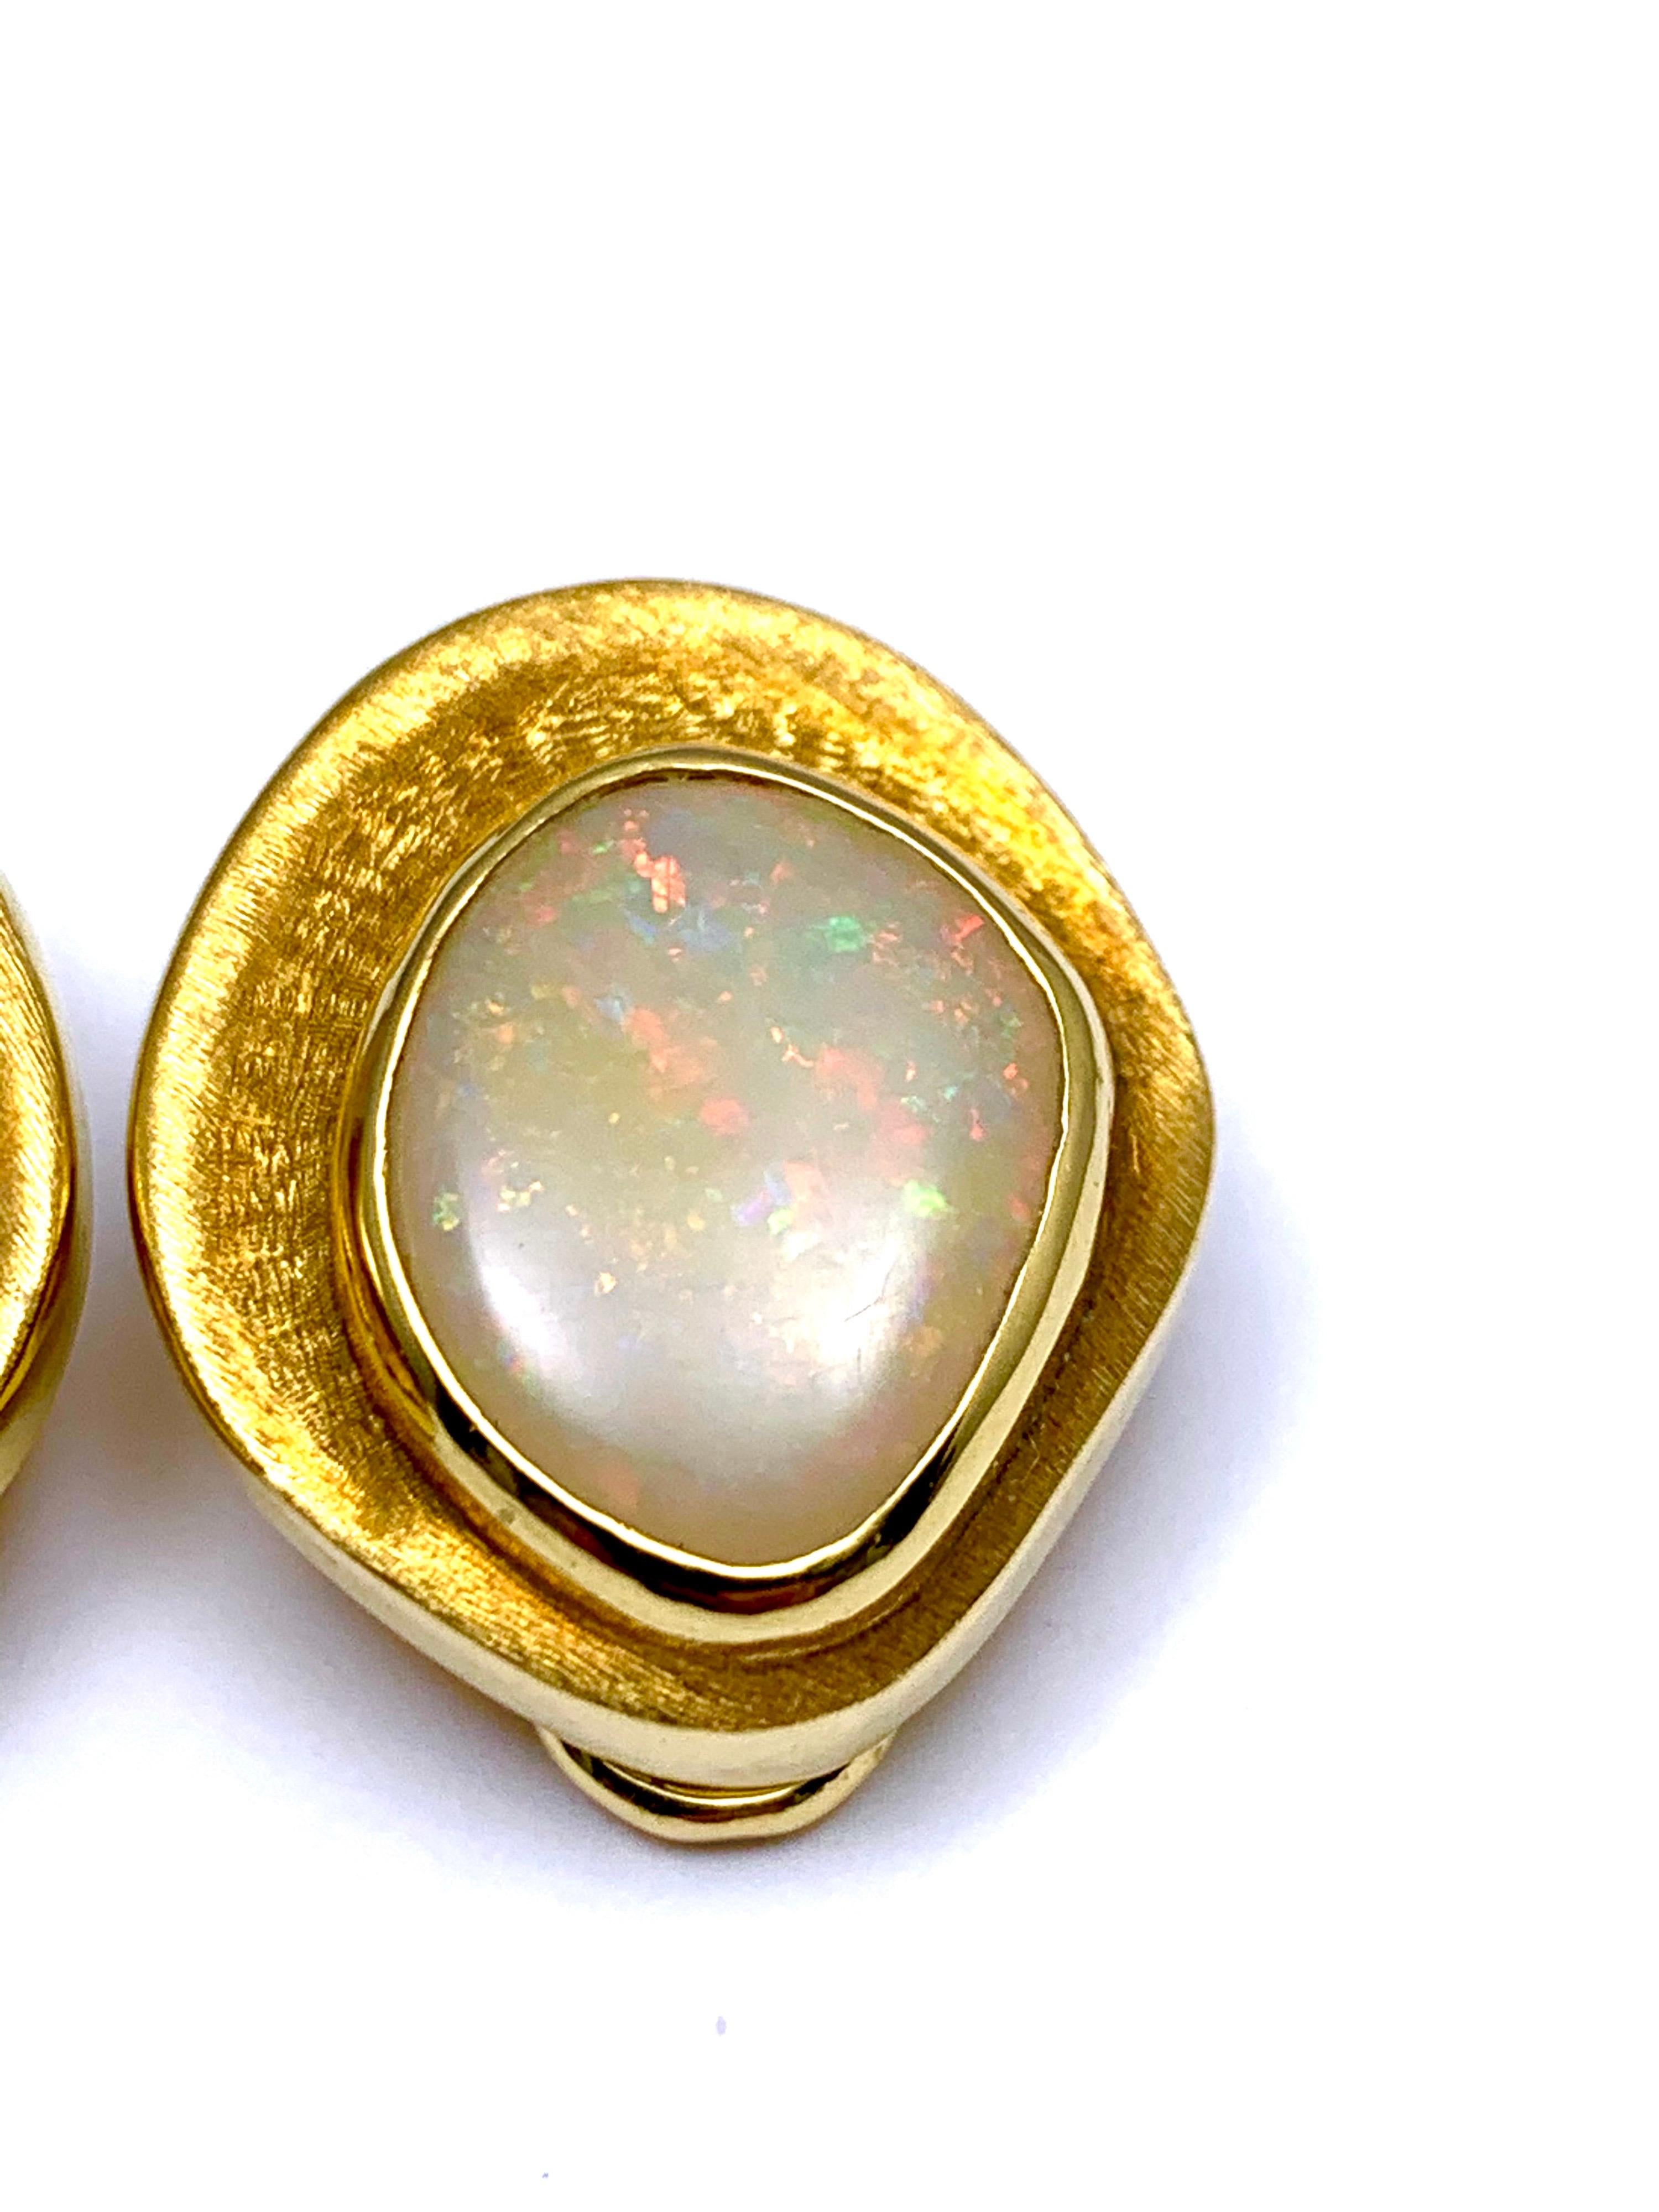 Burle Marx 5.97 Carat Cabochon White Opal and 18 Karat Yellow Gold Earrings 1